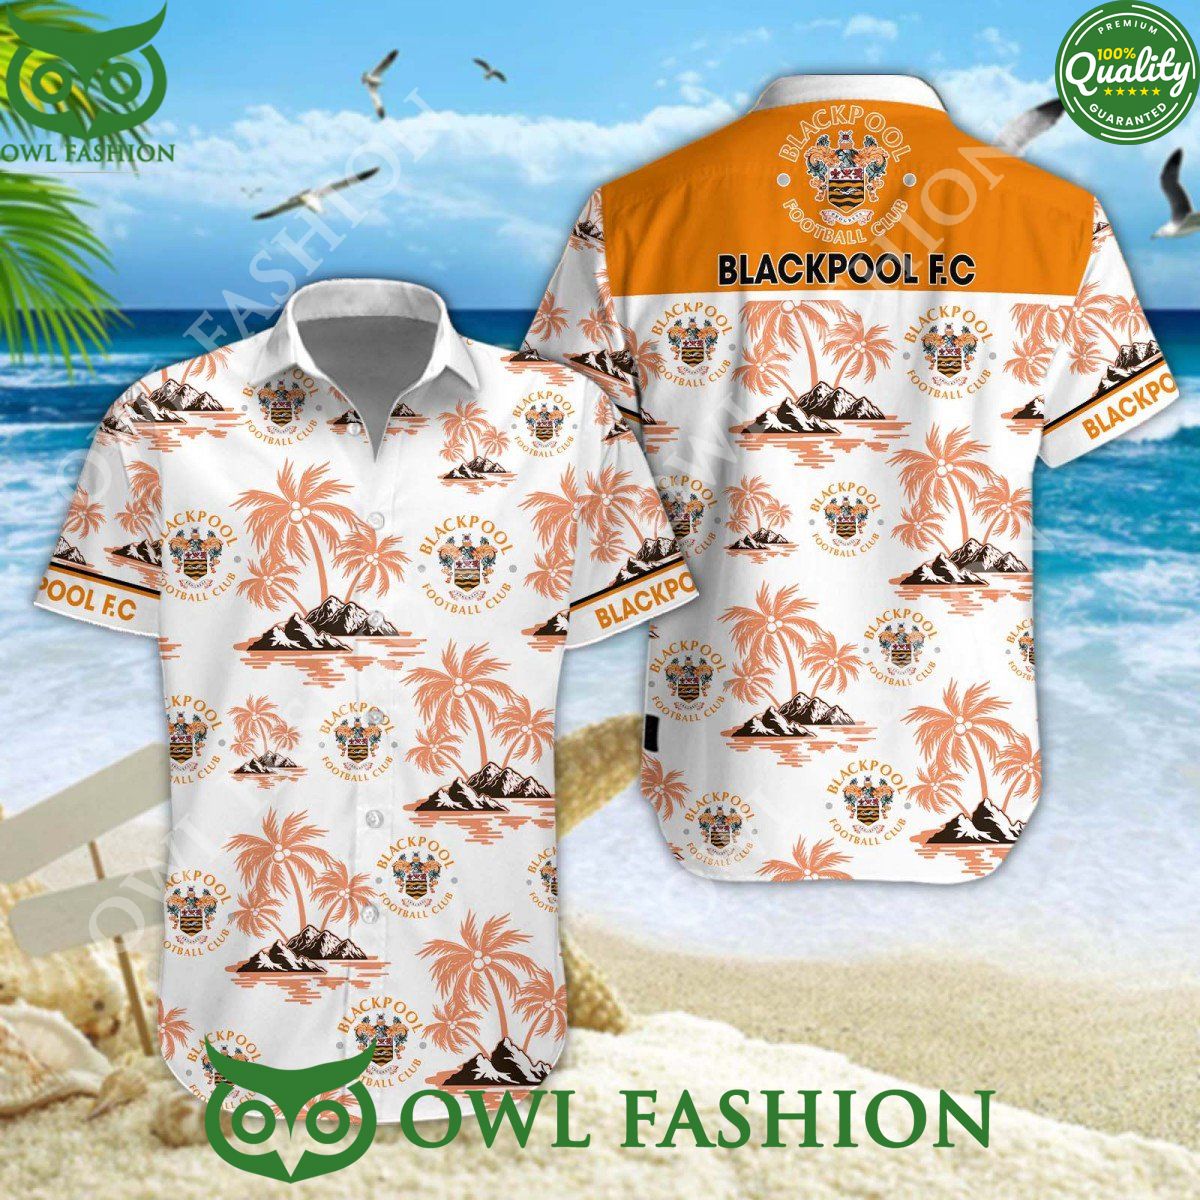 Tropical Football Lancashire Blackpool FC League One hawaii shirt